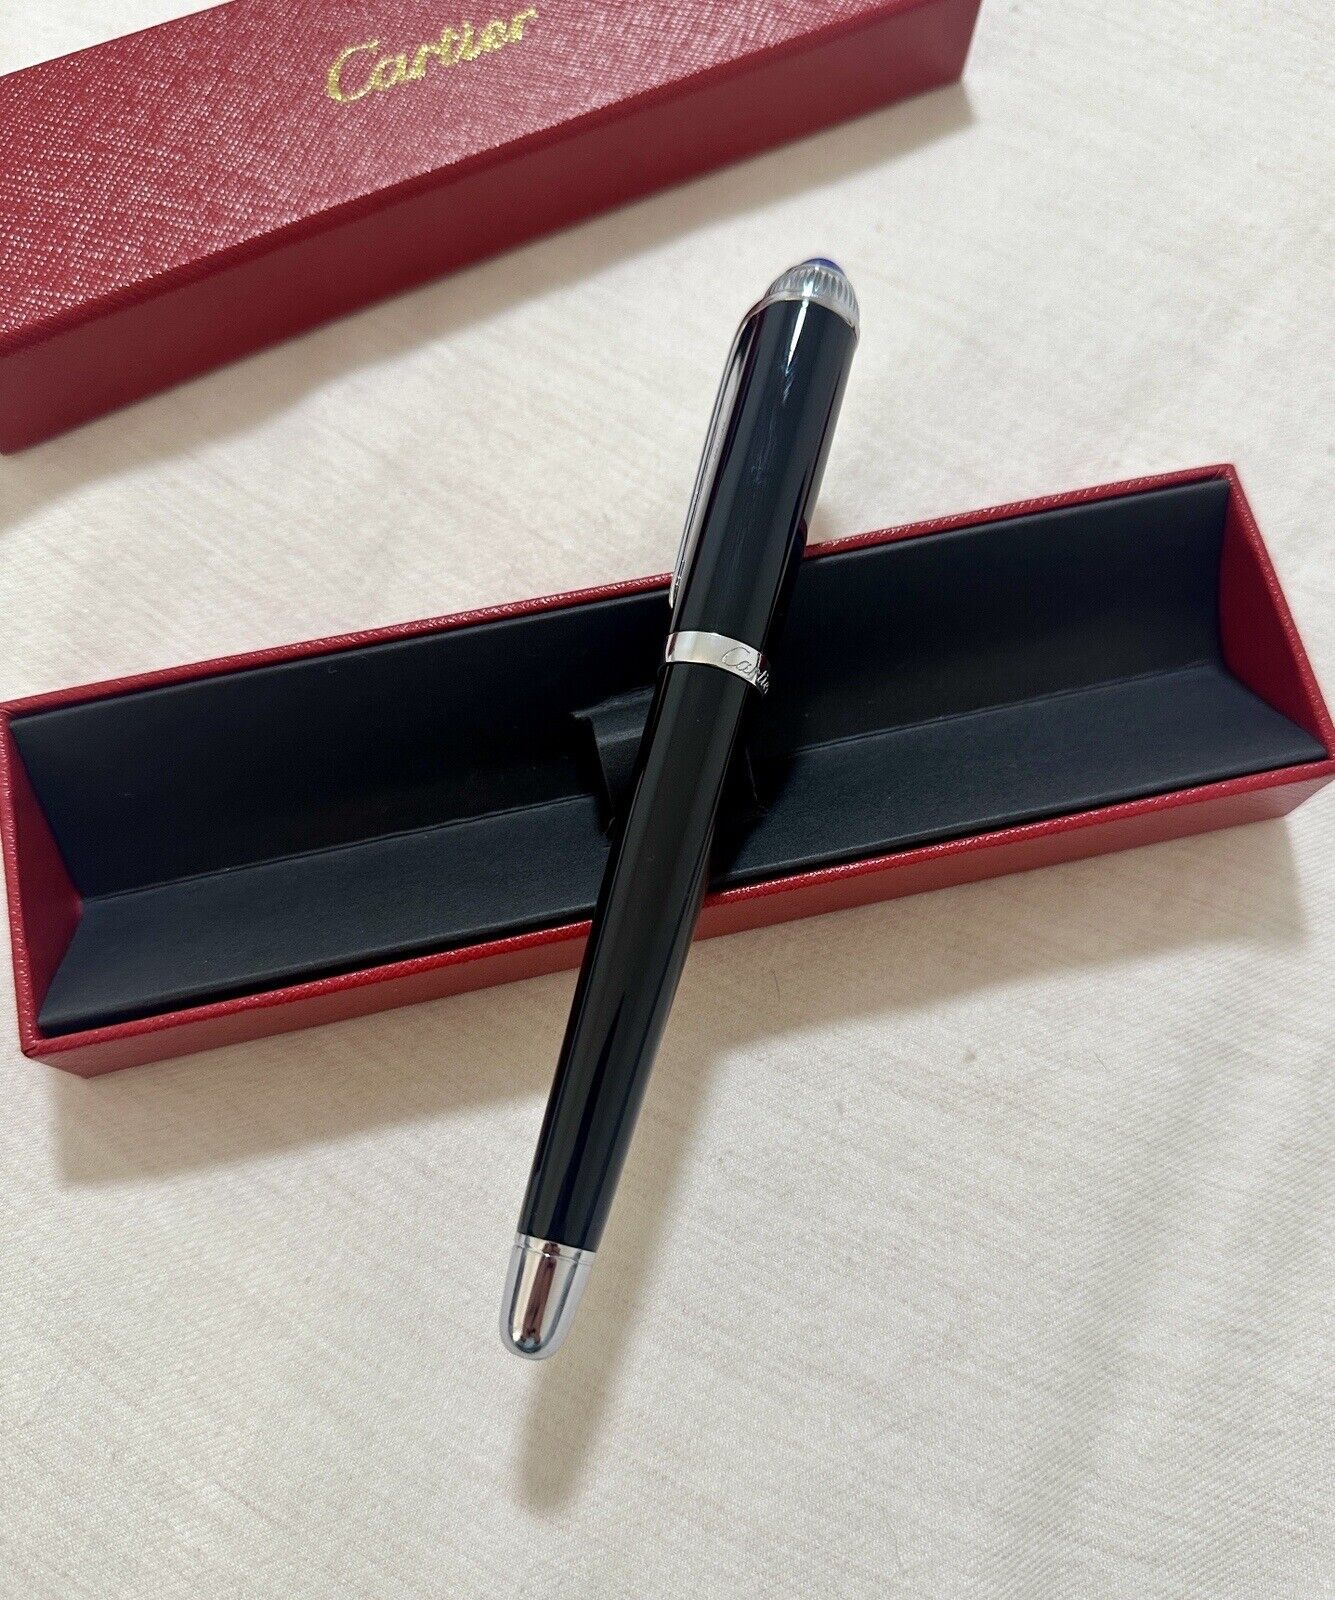 Cartier Executive Roller Ball Pen Black Composite AD VIP Gift w/ Service Pouch